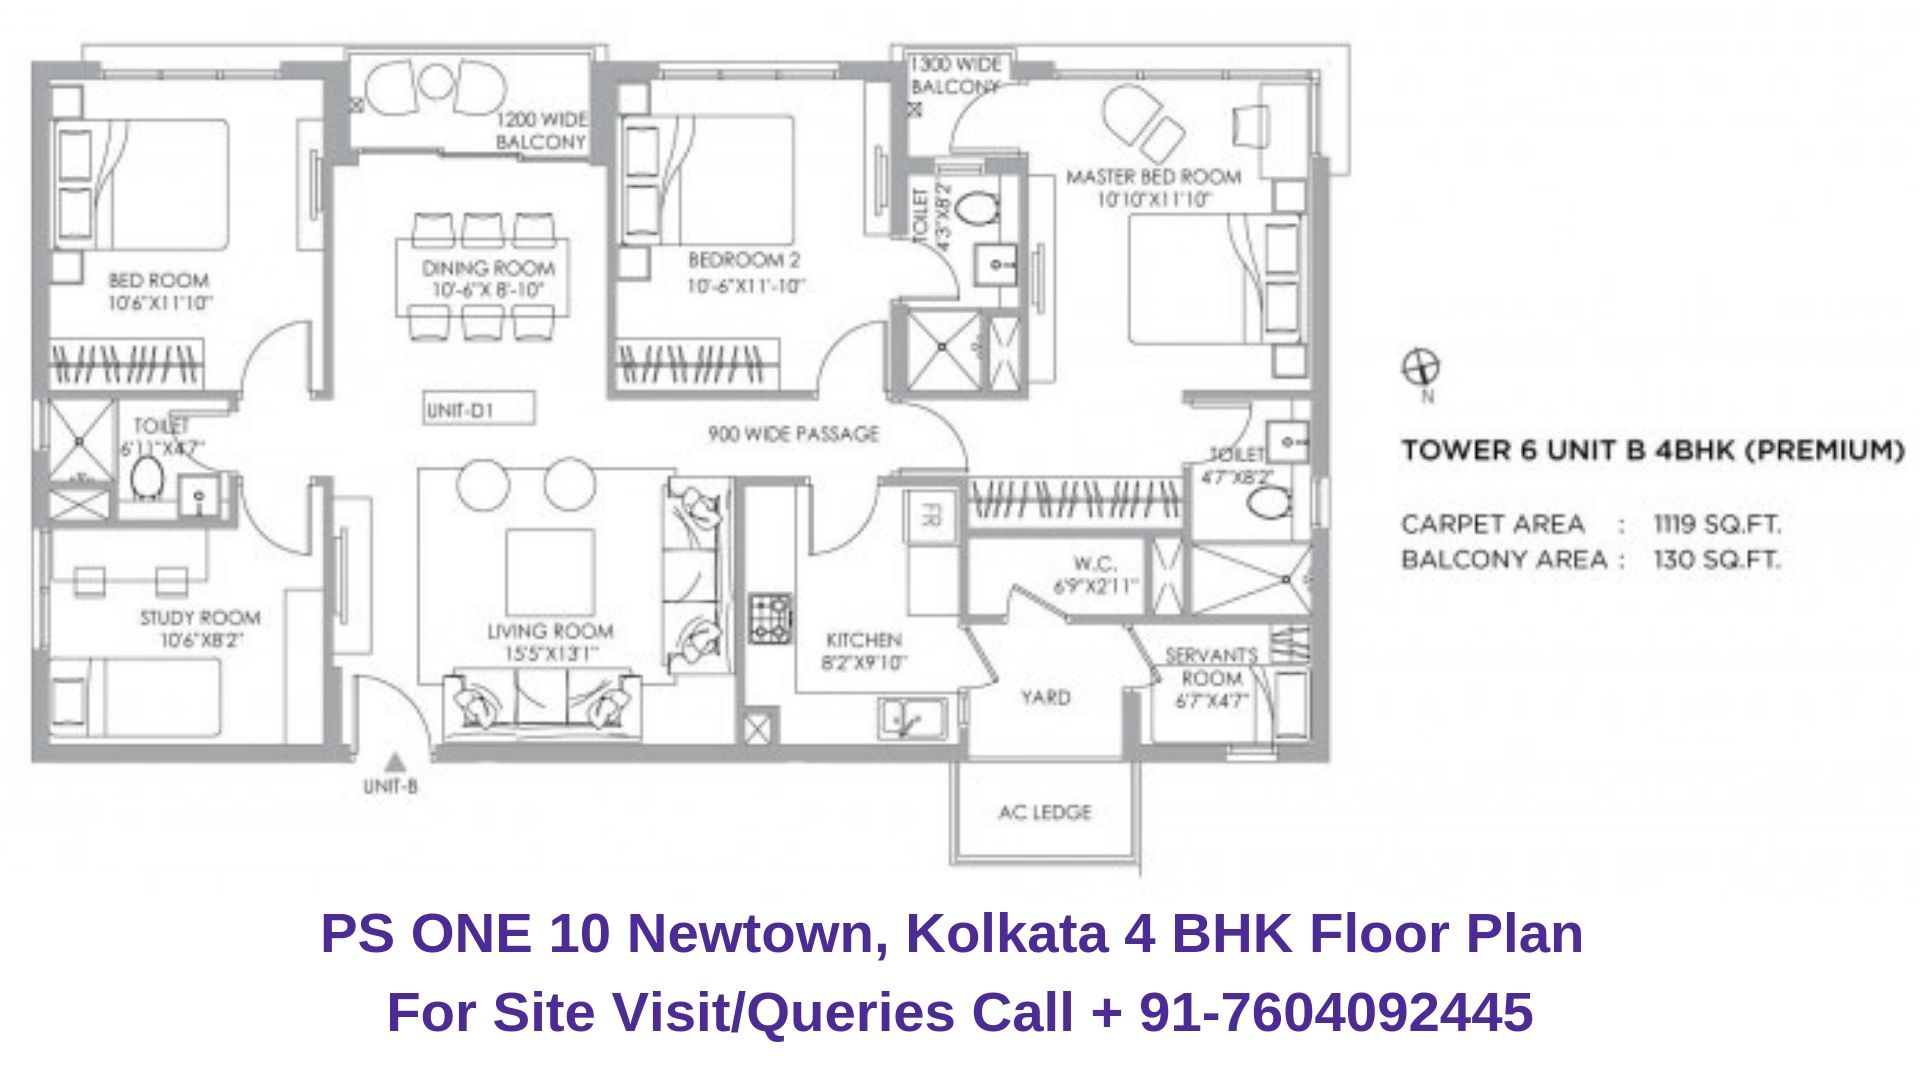 PS ONE 10 Newtown, Kolkata 4 BHK Floor Plan